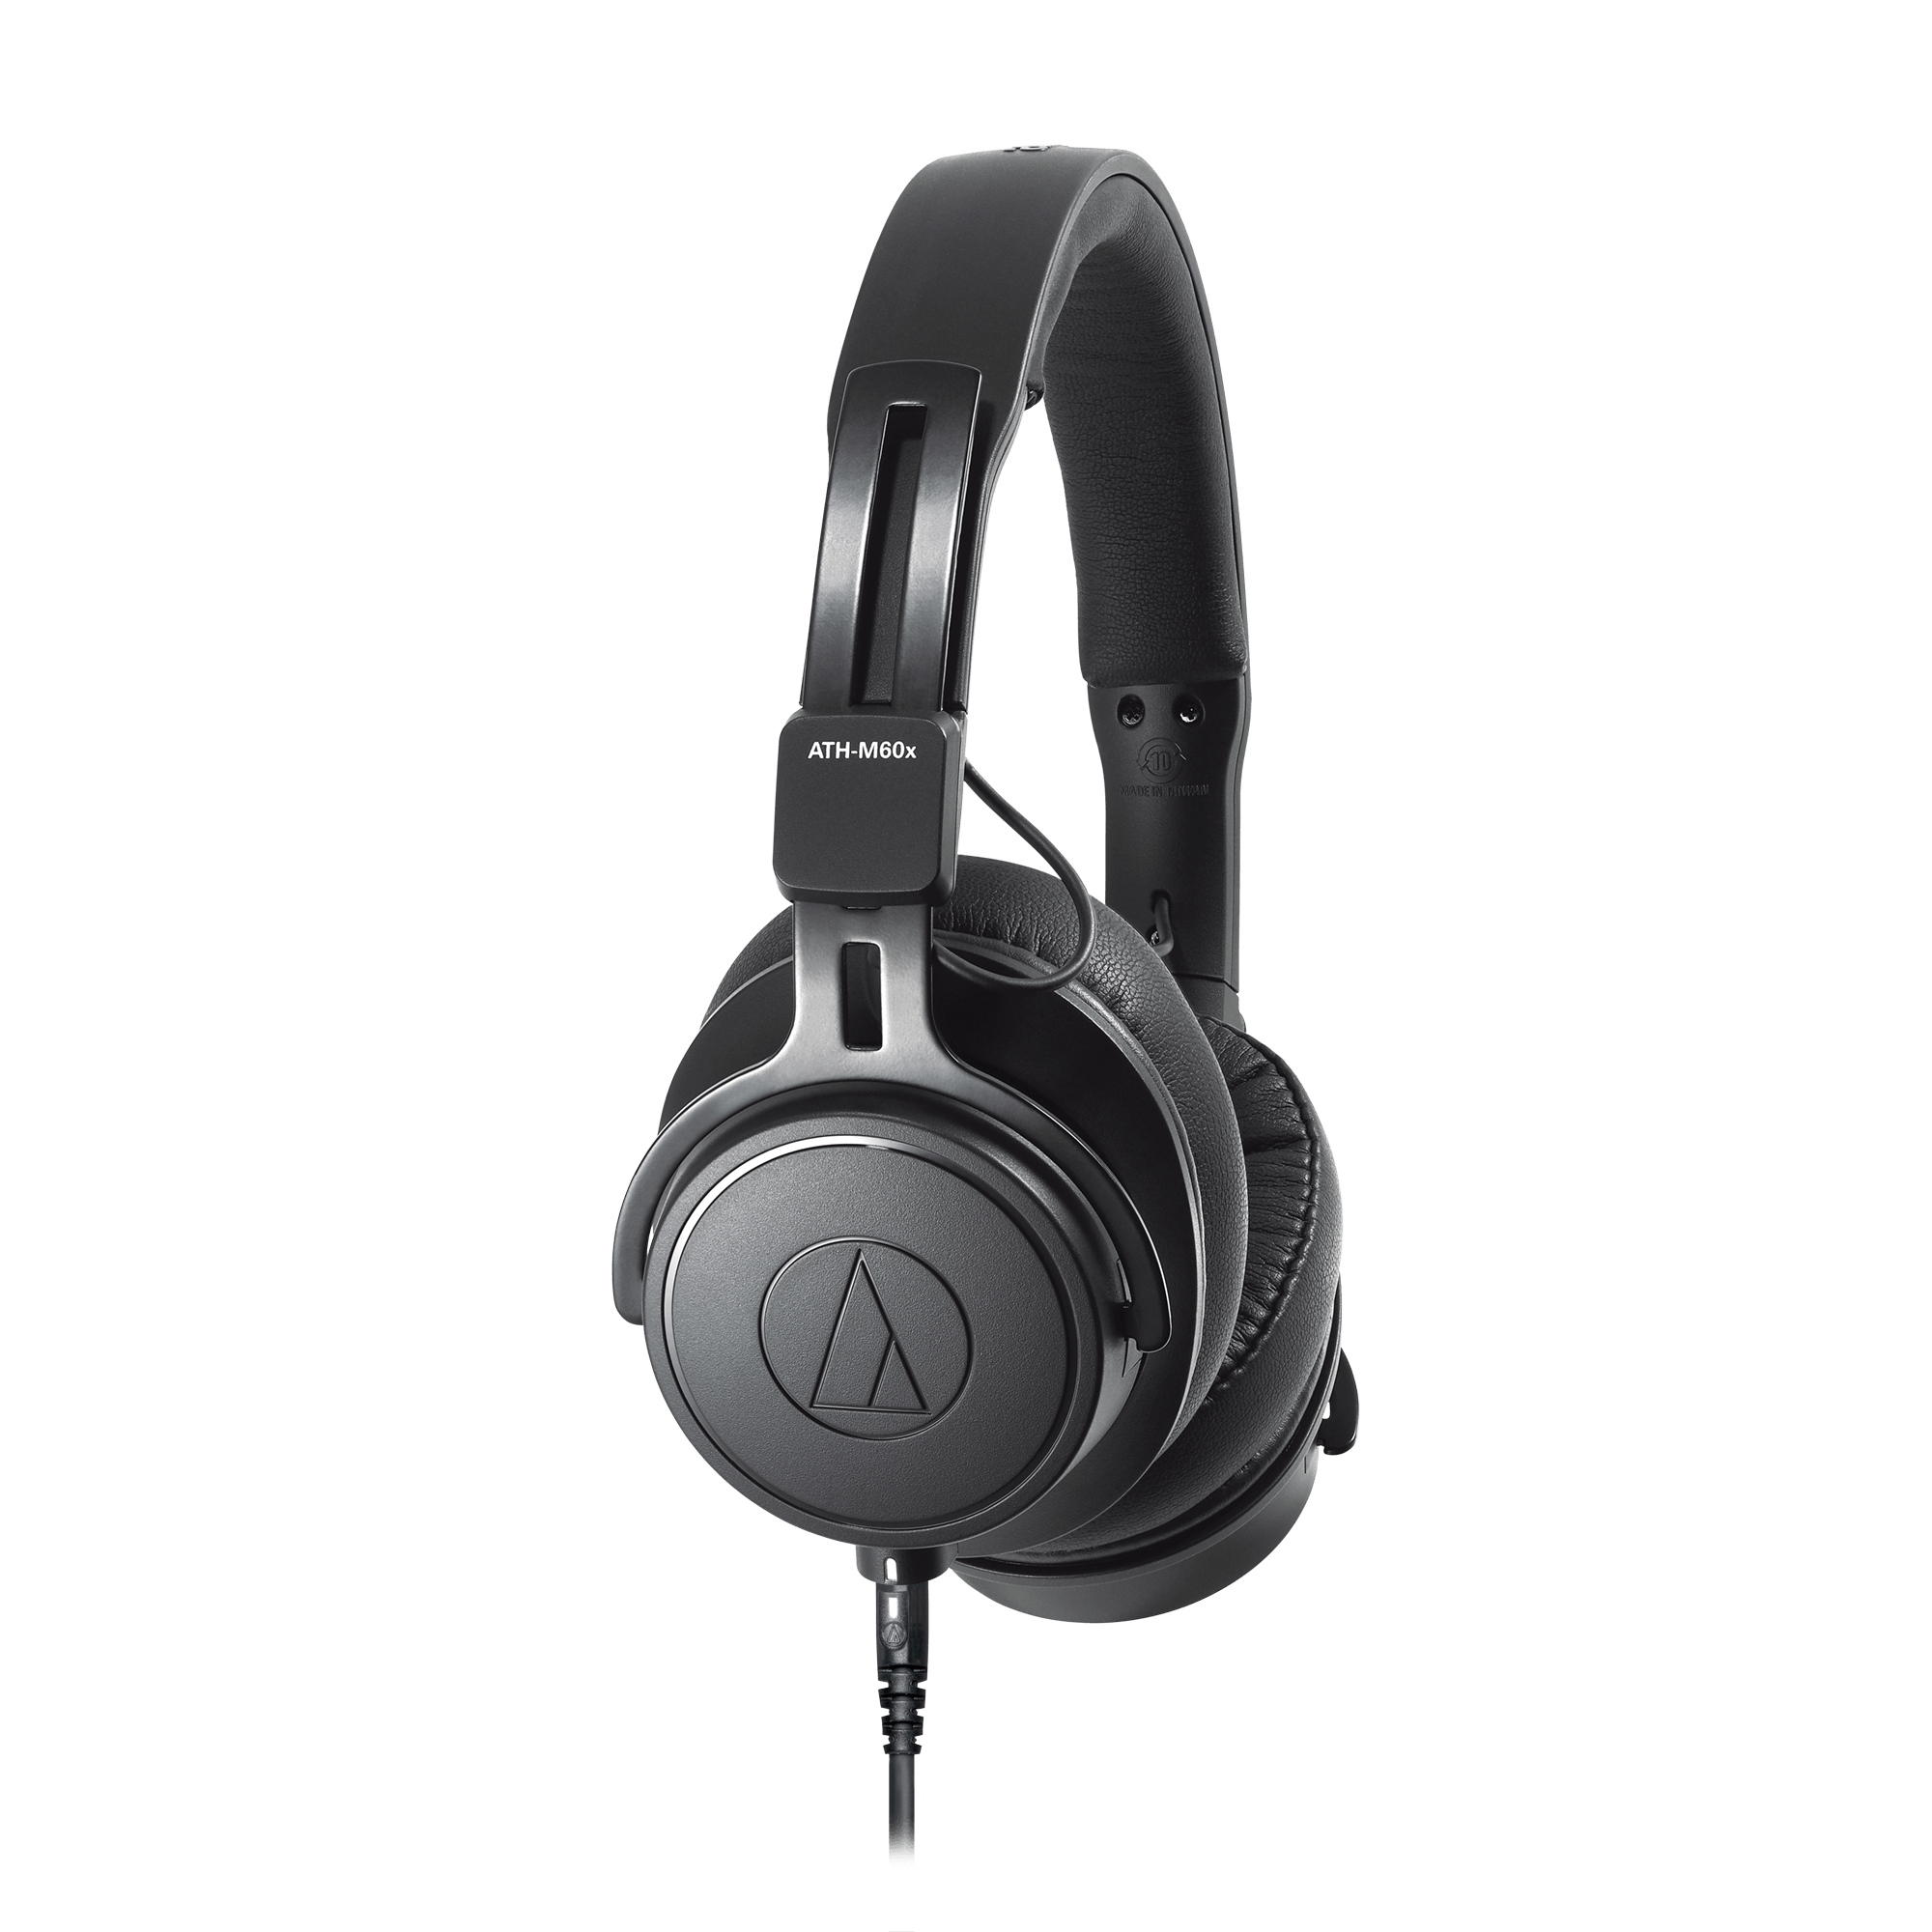 Audio Technica ATH-M60x Headphones